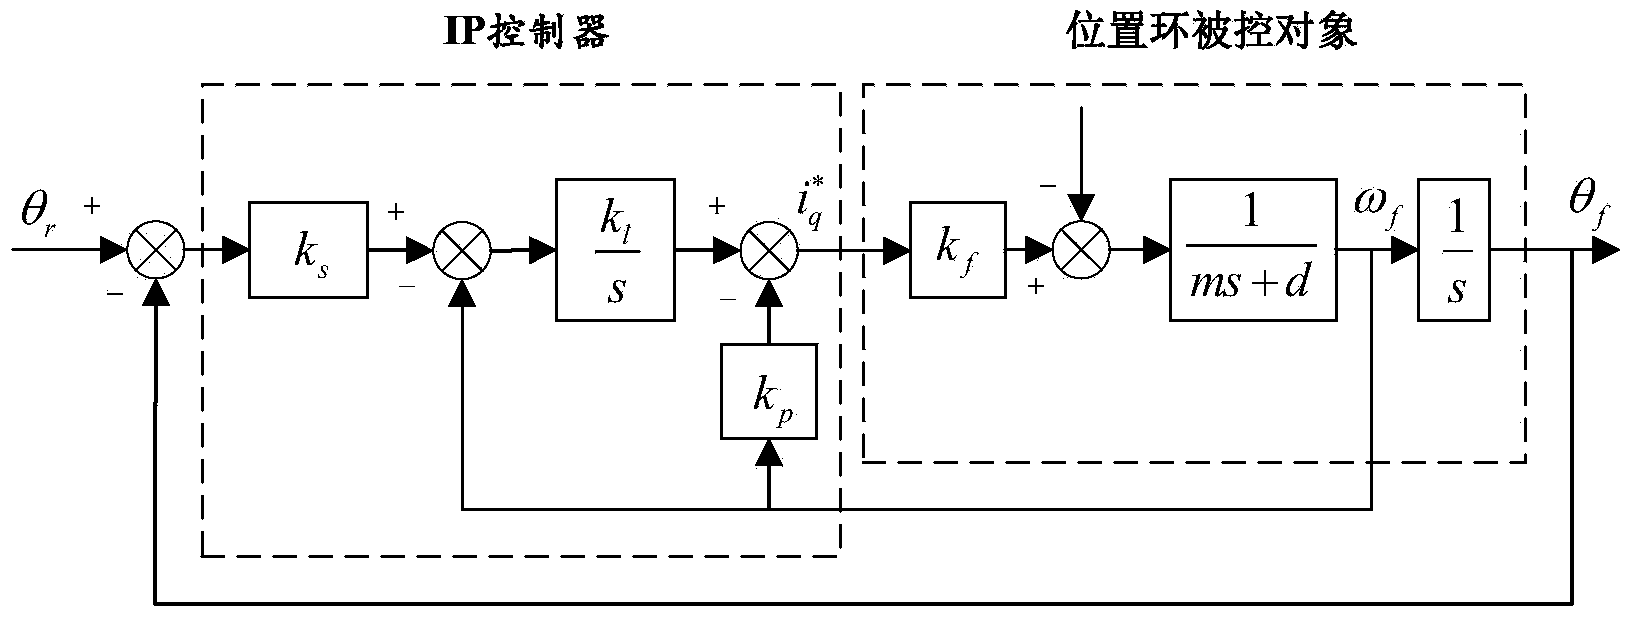 Parameter self-correcting method of position loop IP controller of alternating current servo system